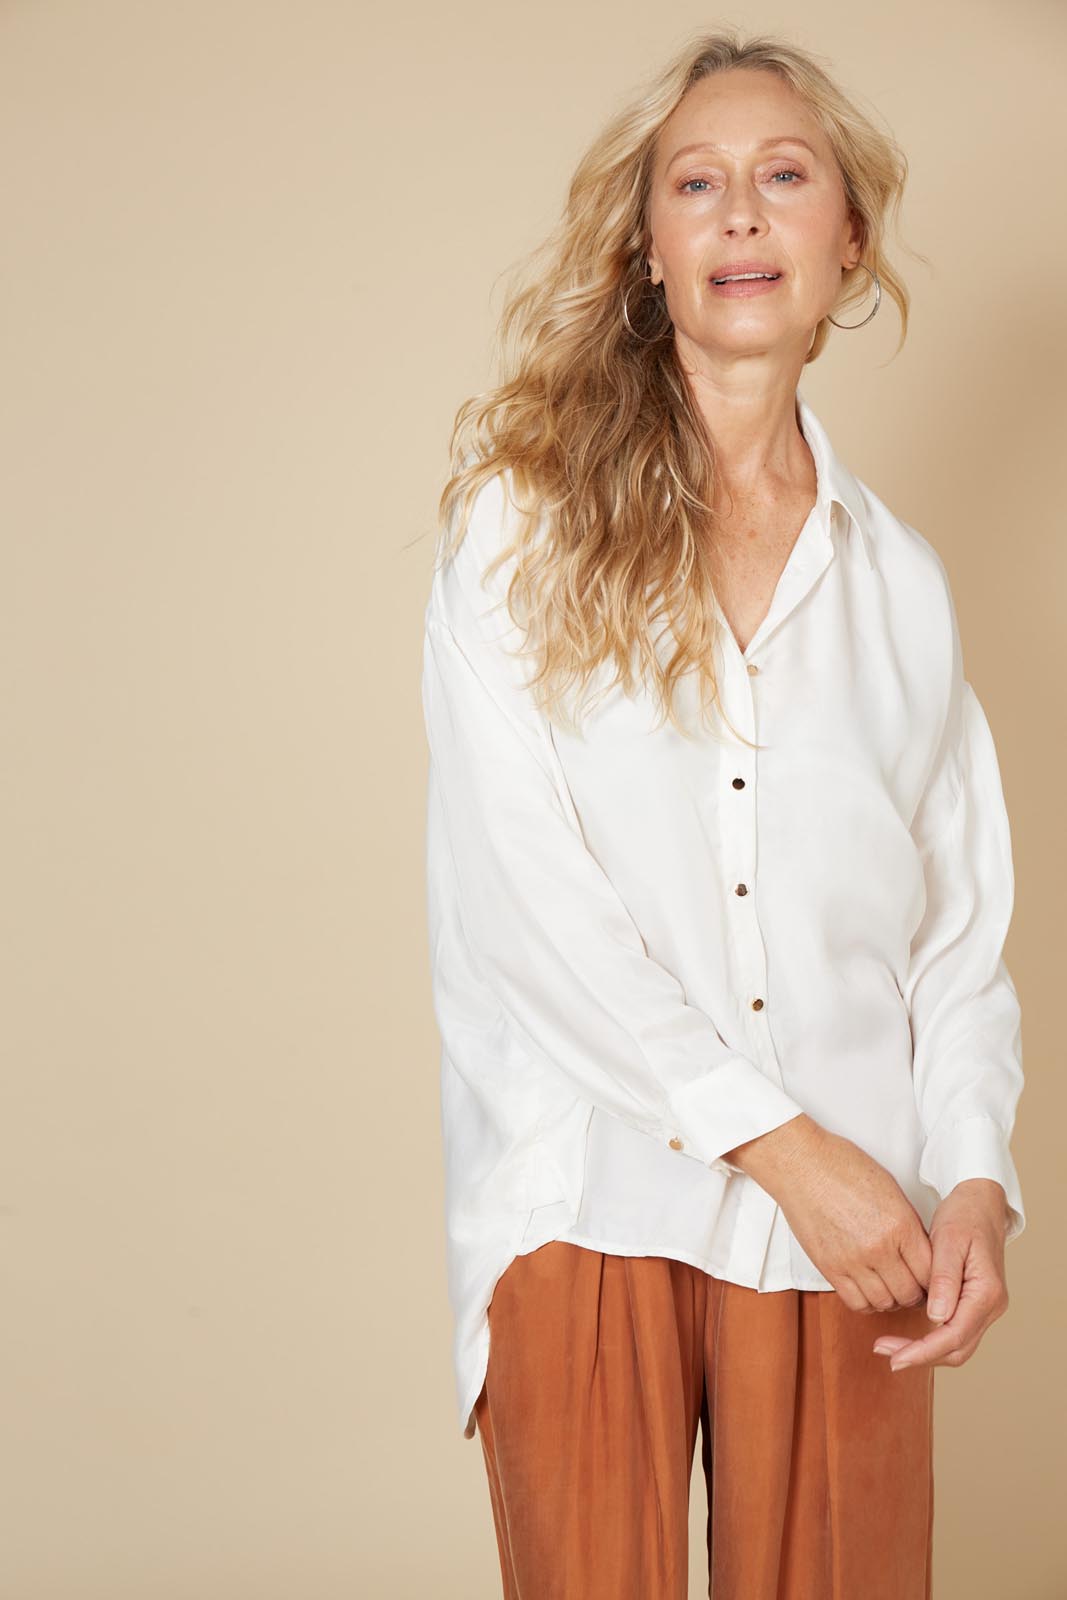 Vienetta Shirt - Blanc - eb&ive Clothing - Shirt L/S One Size